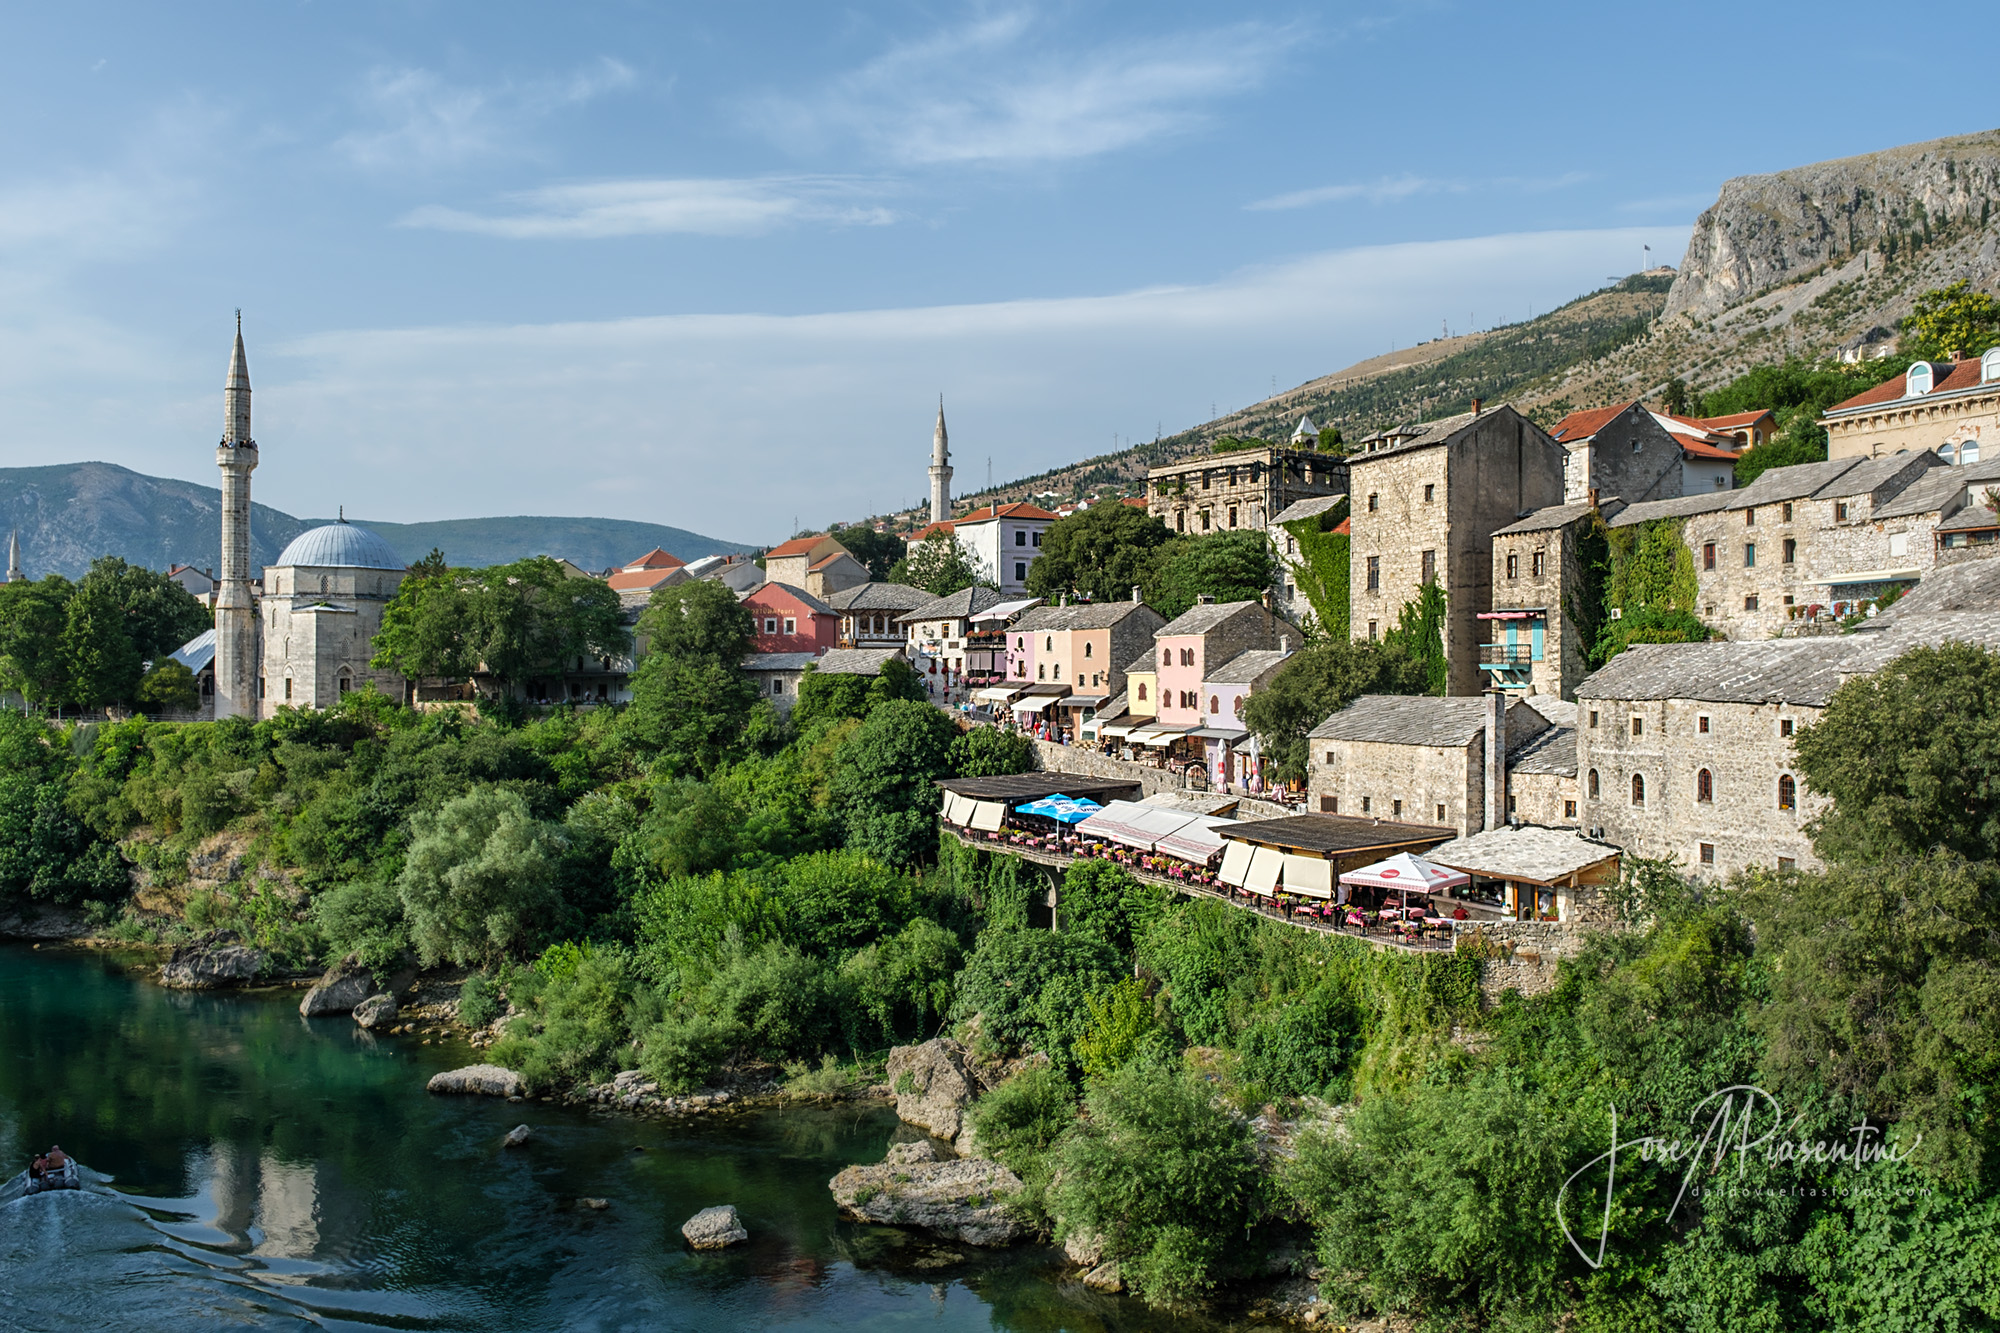 Mostar city